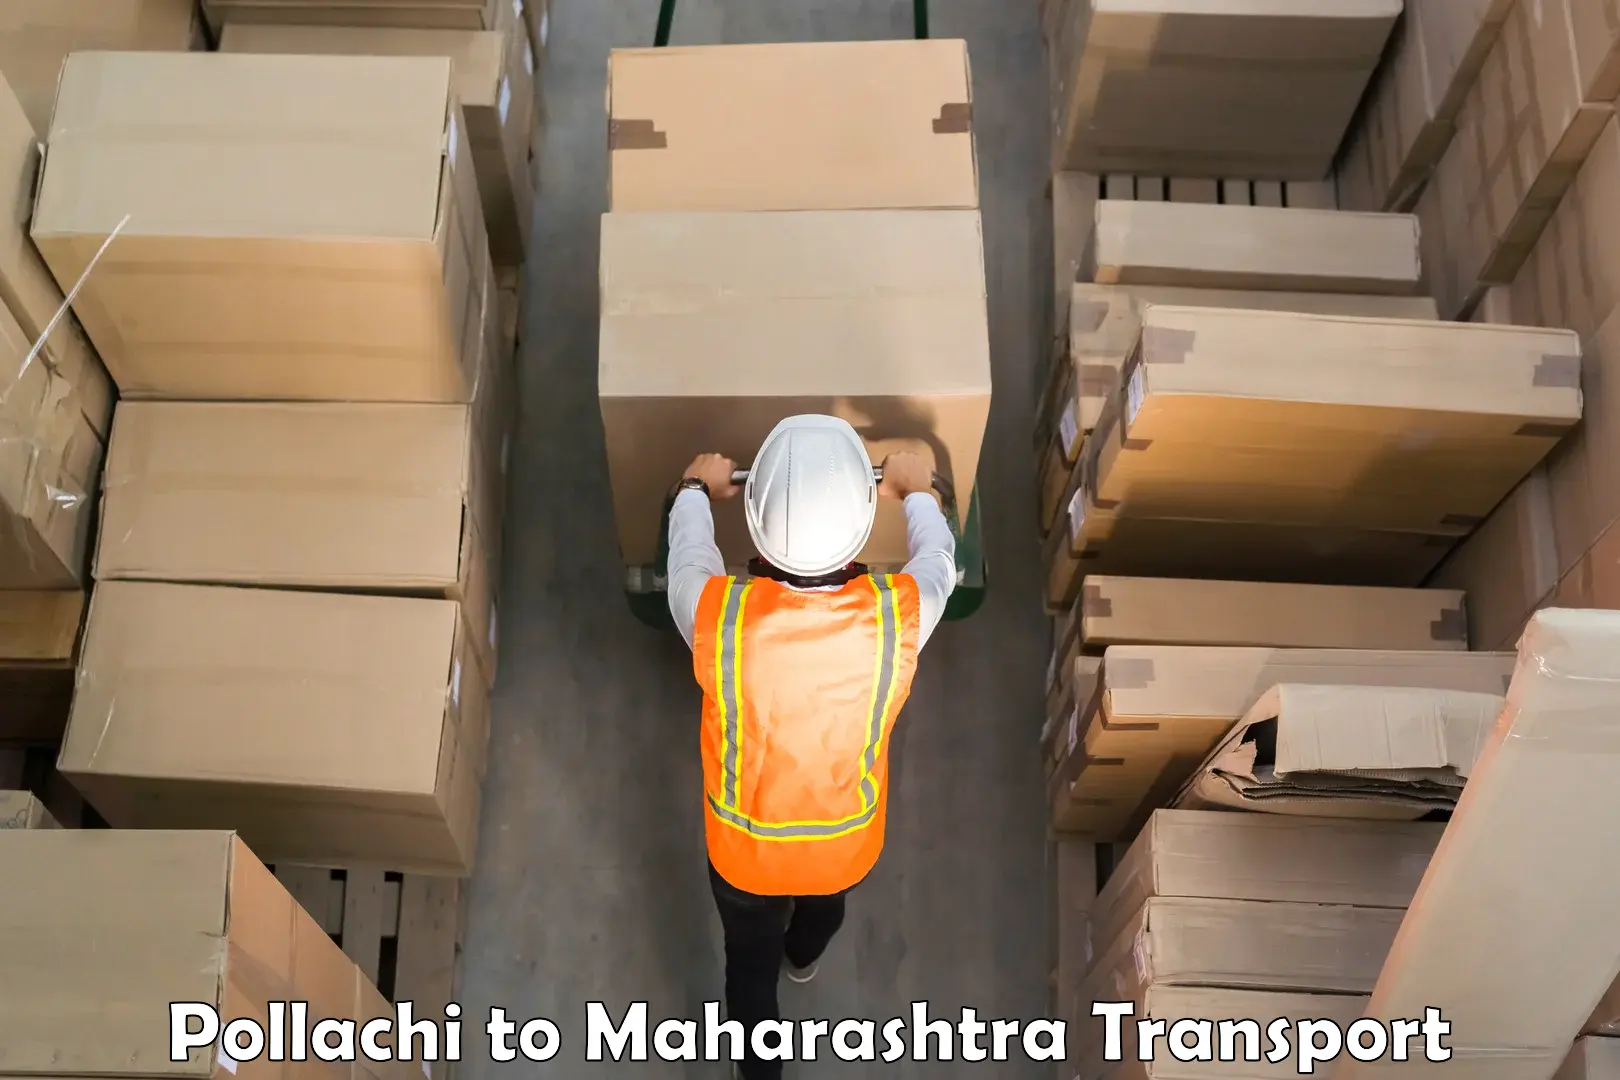 Furniture transport service Pollachi to Sindhudurg